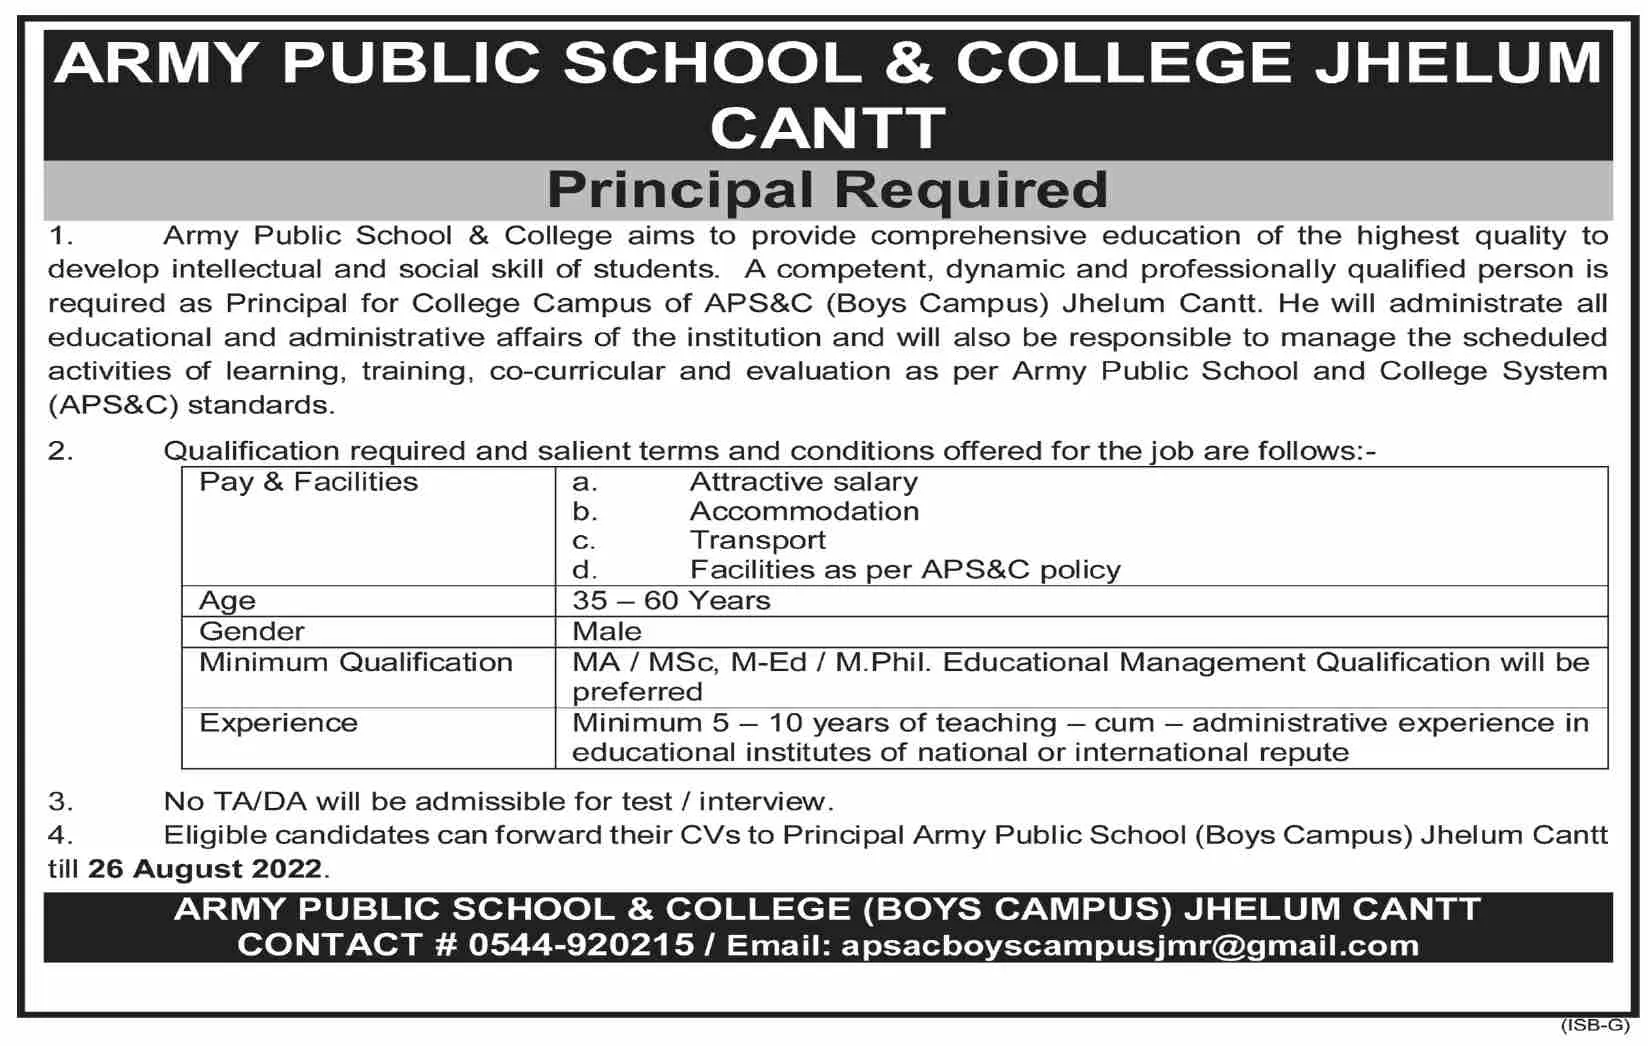 Army Public School & College APS Jobs 2022 Jhelum Cantt Principal Required